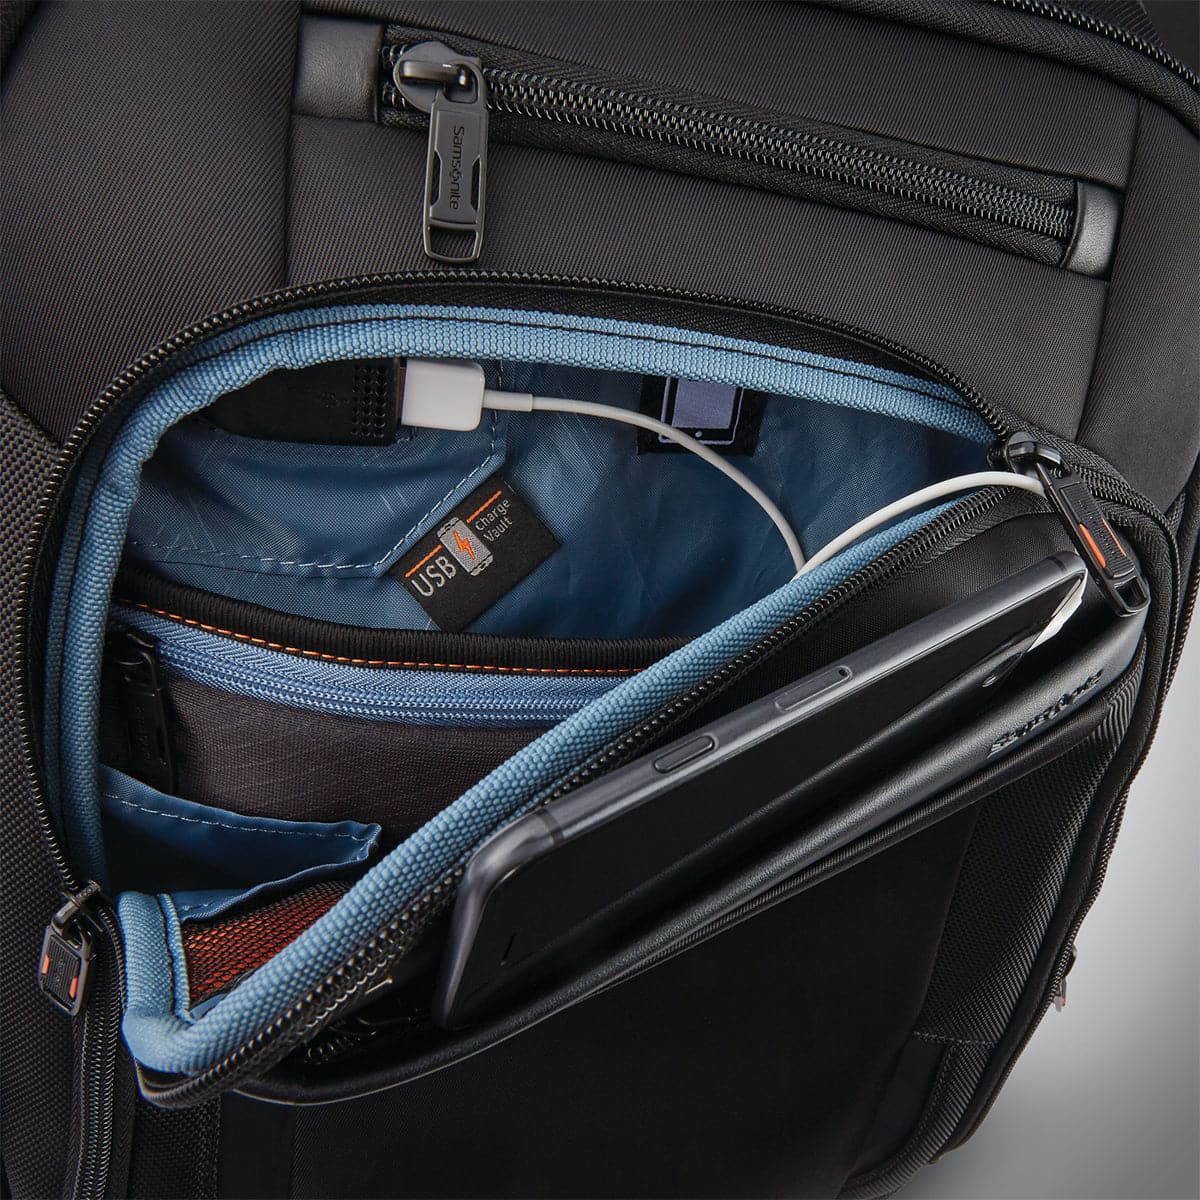 Samsonite Standard Backpack